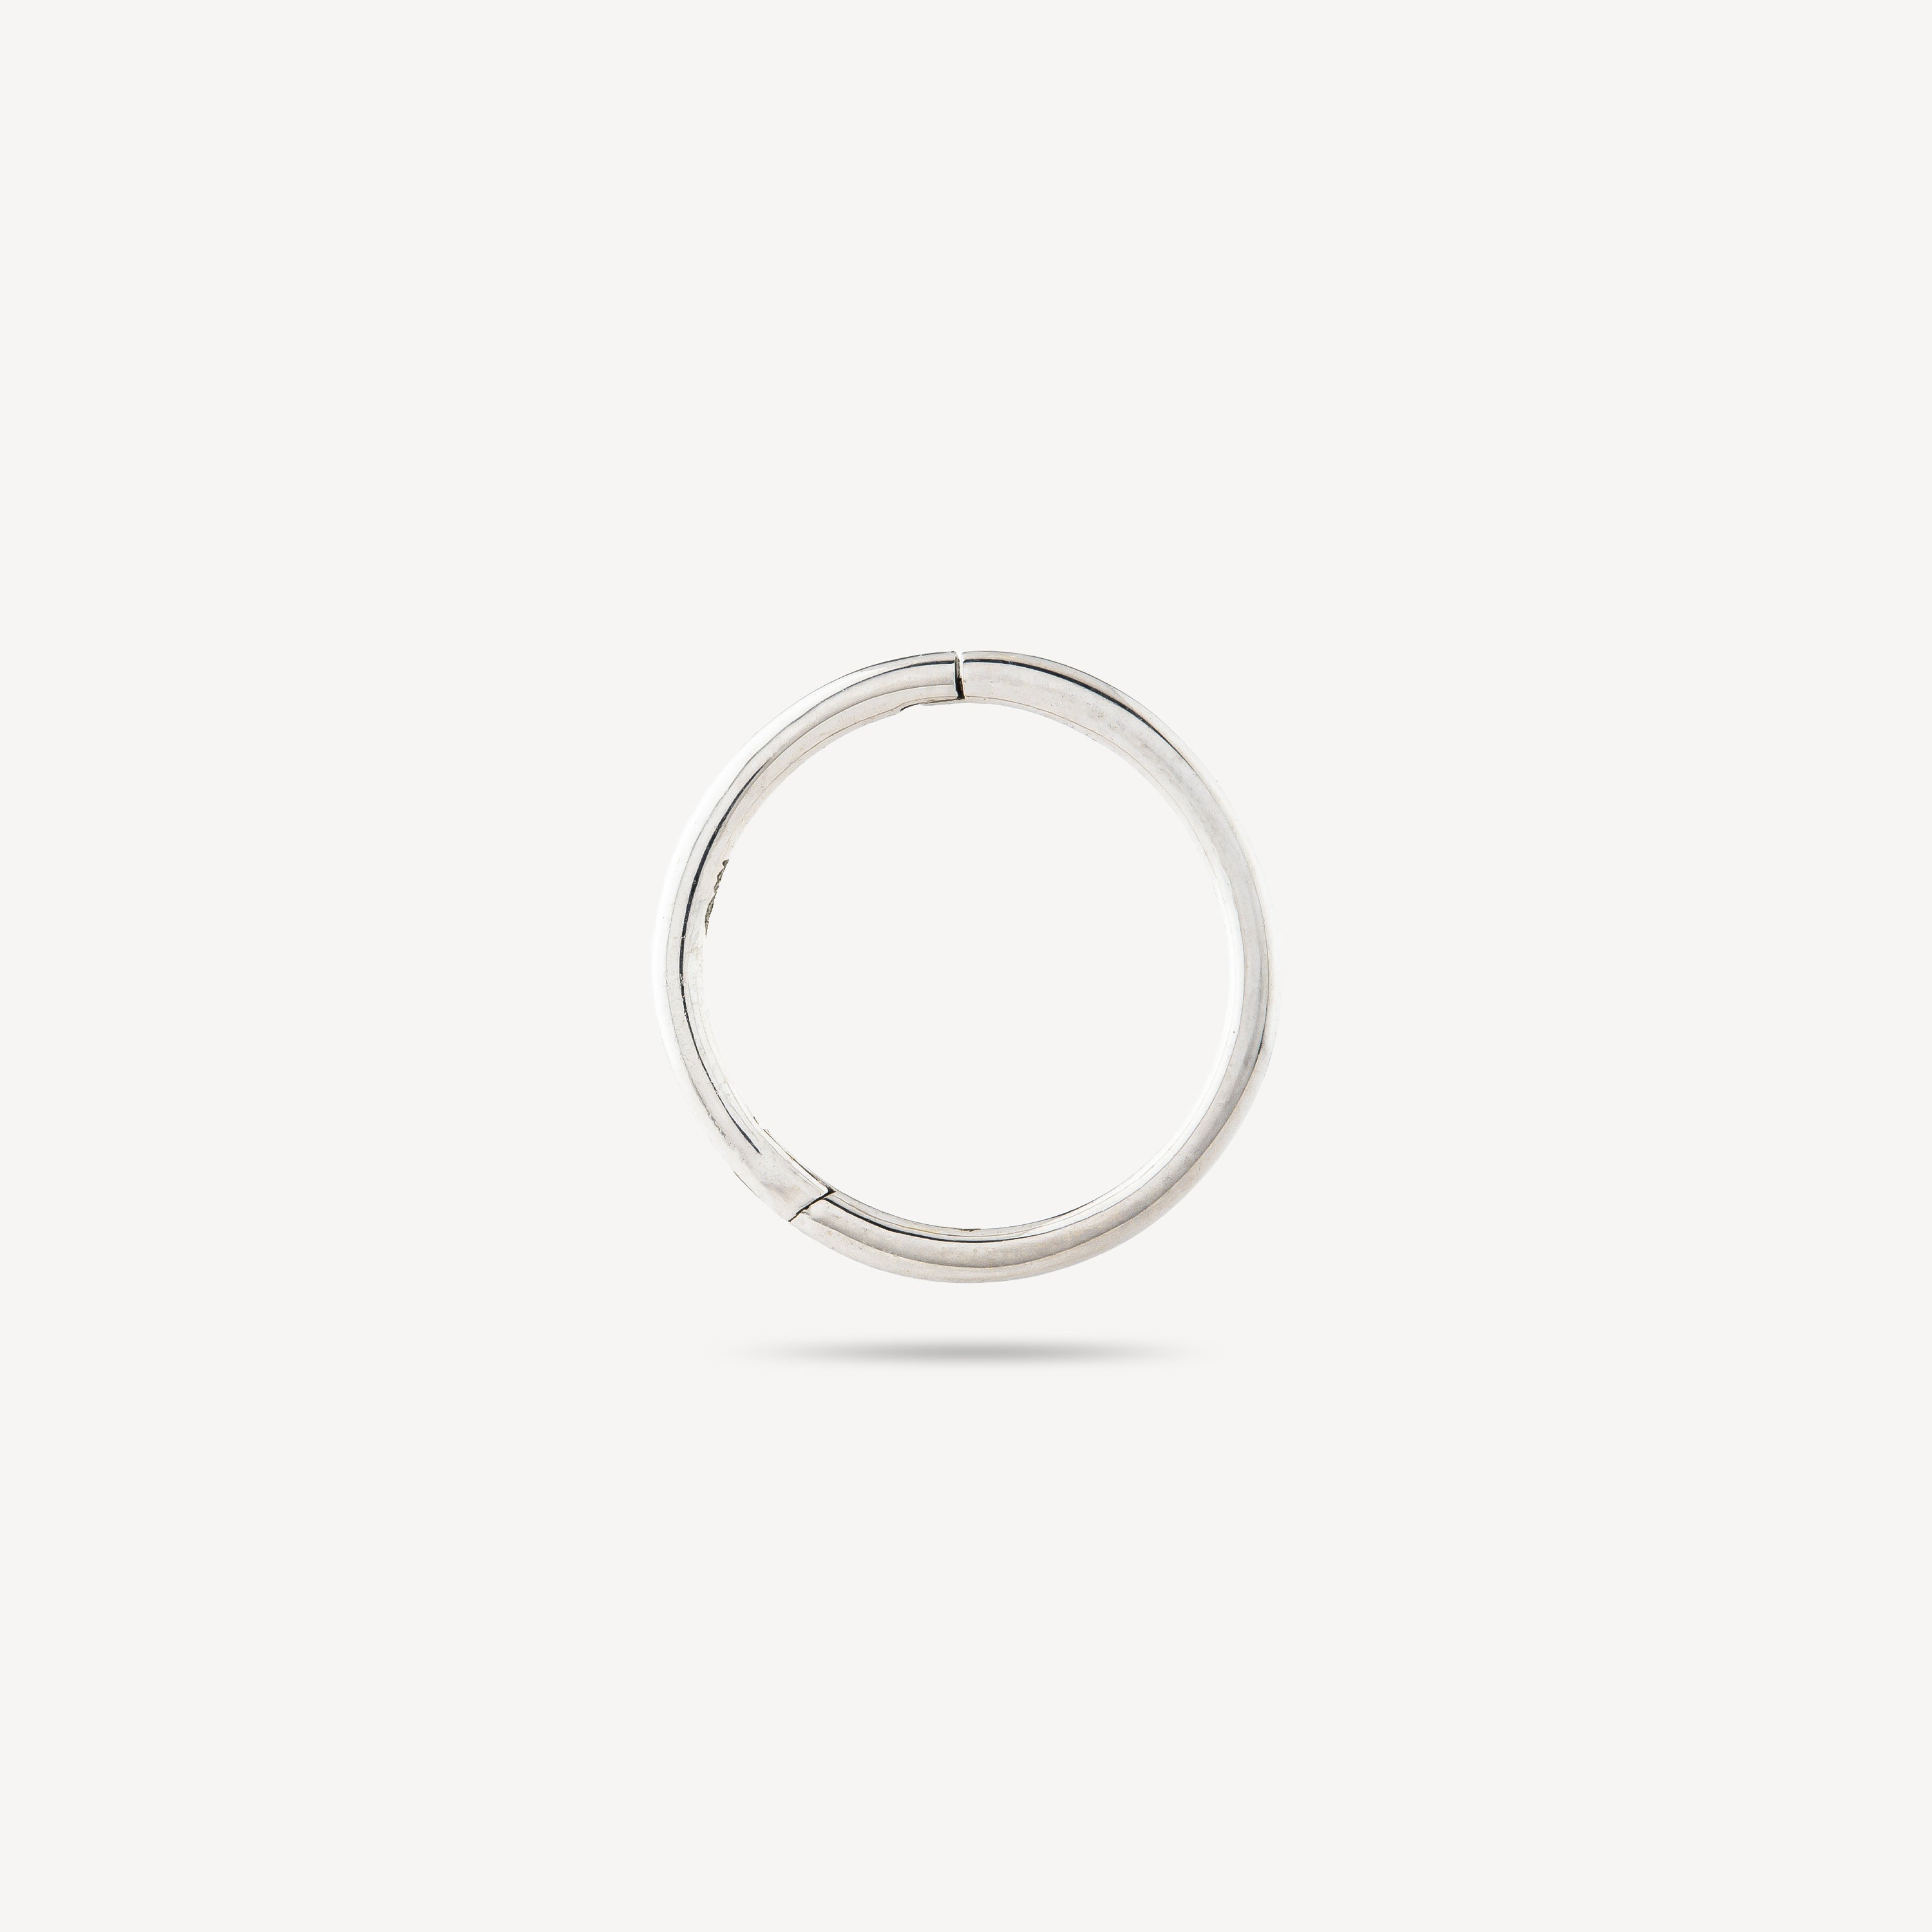 Piercing Ring 11mm White Gold